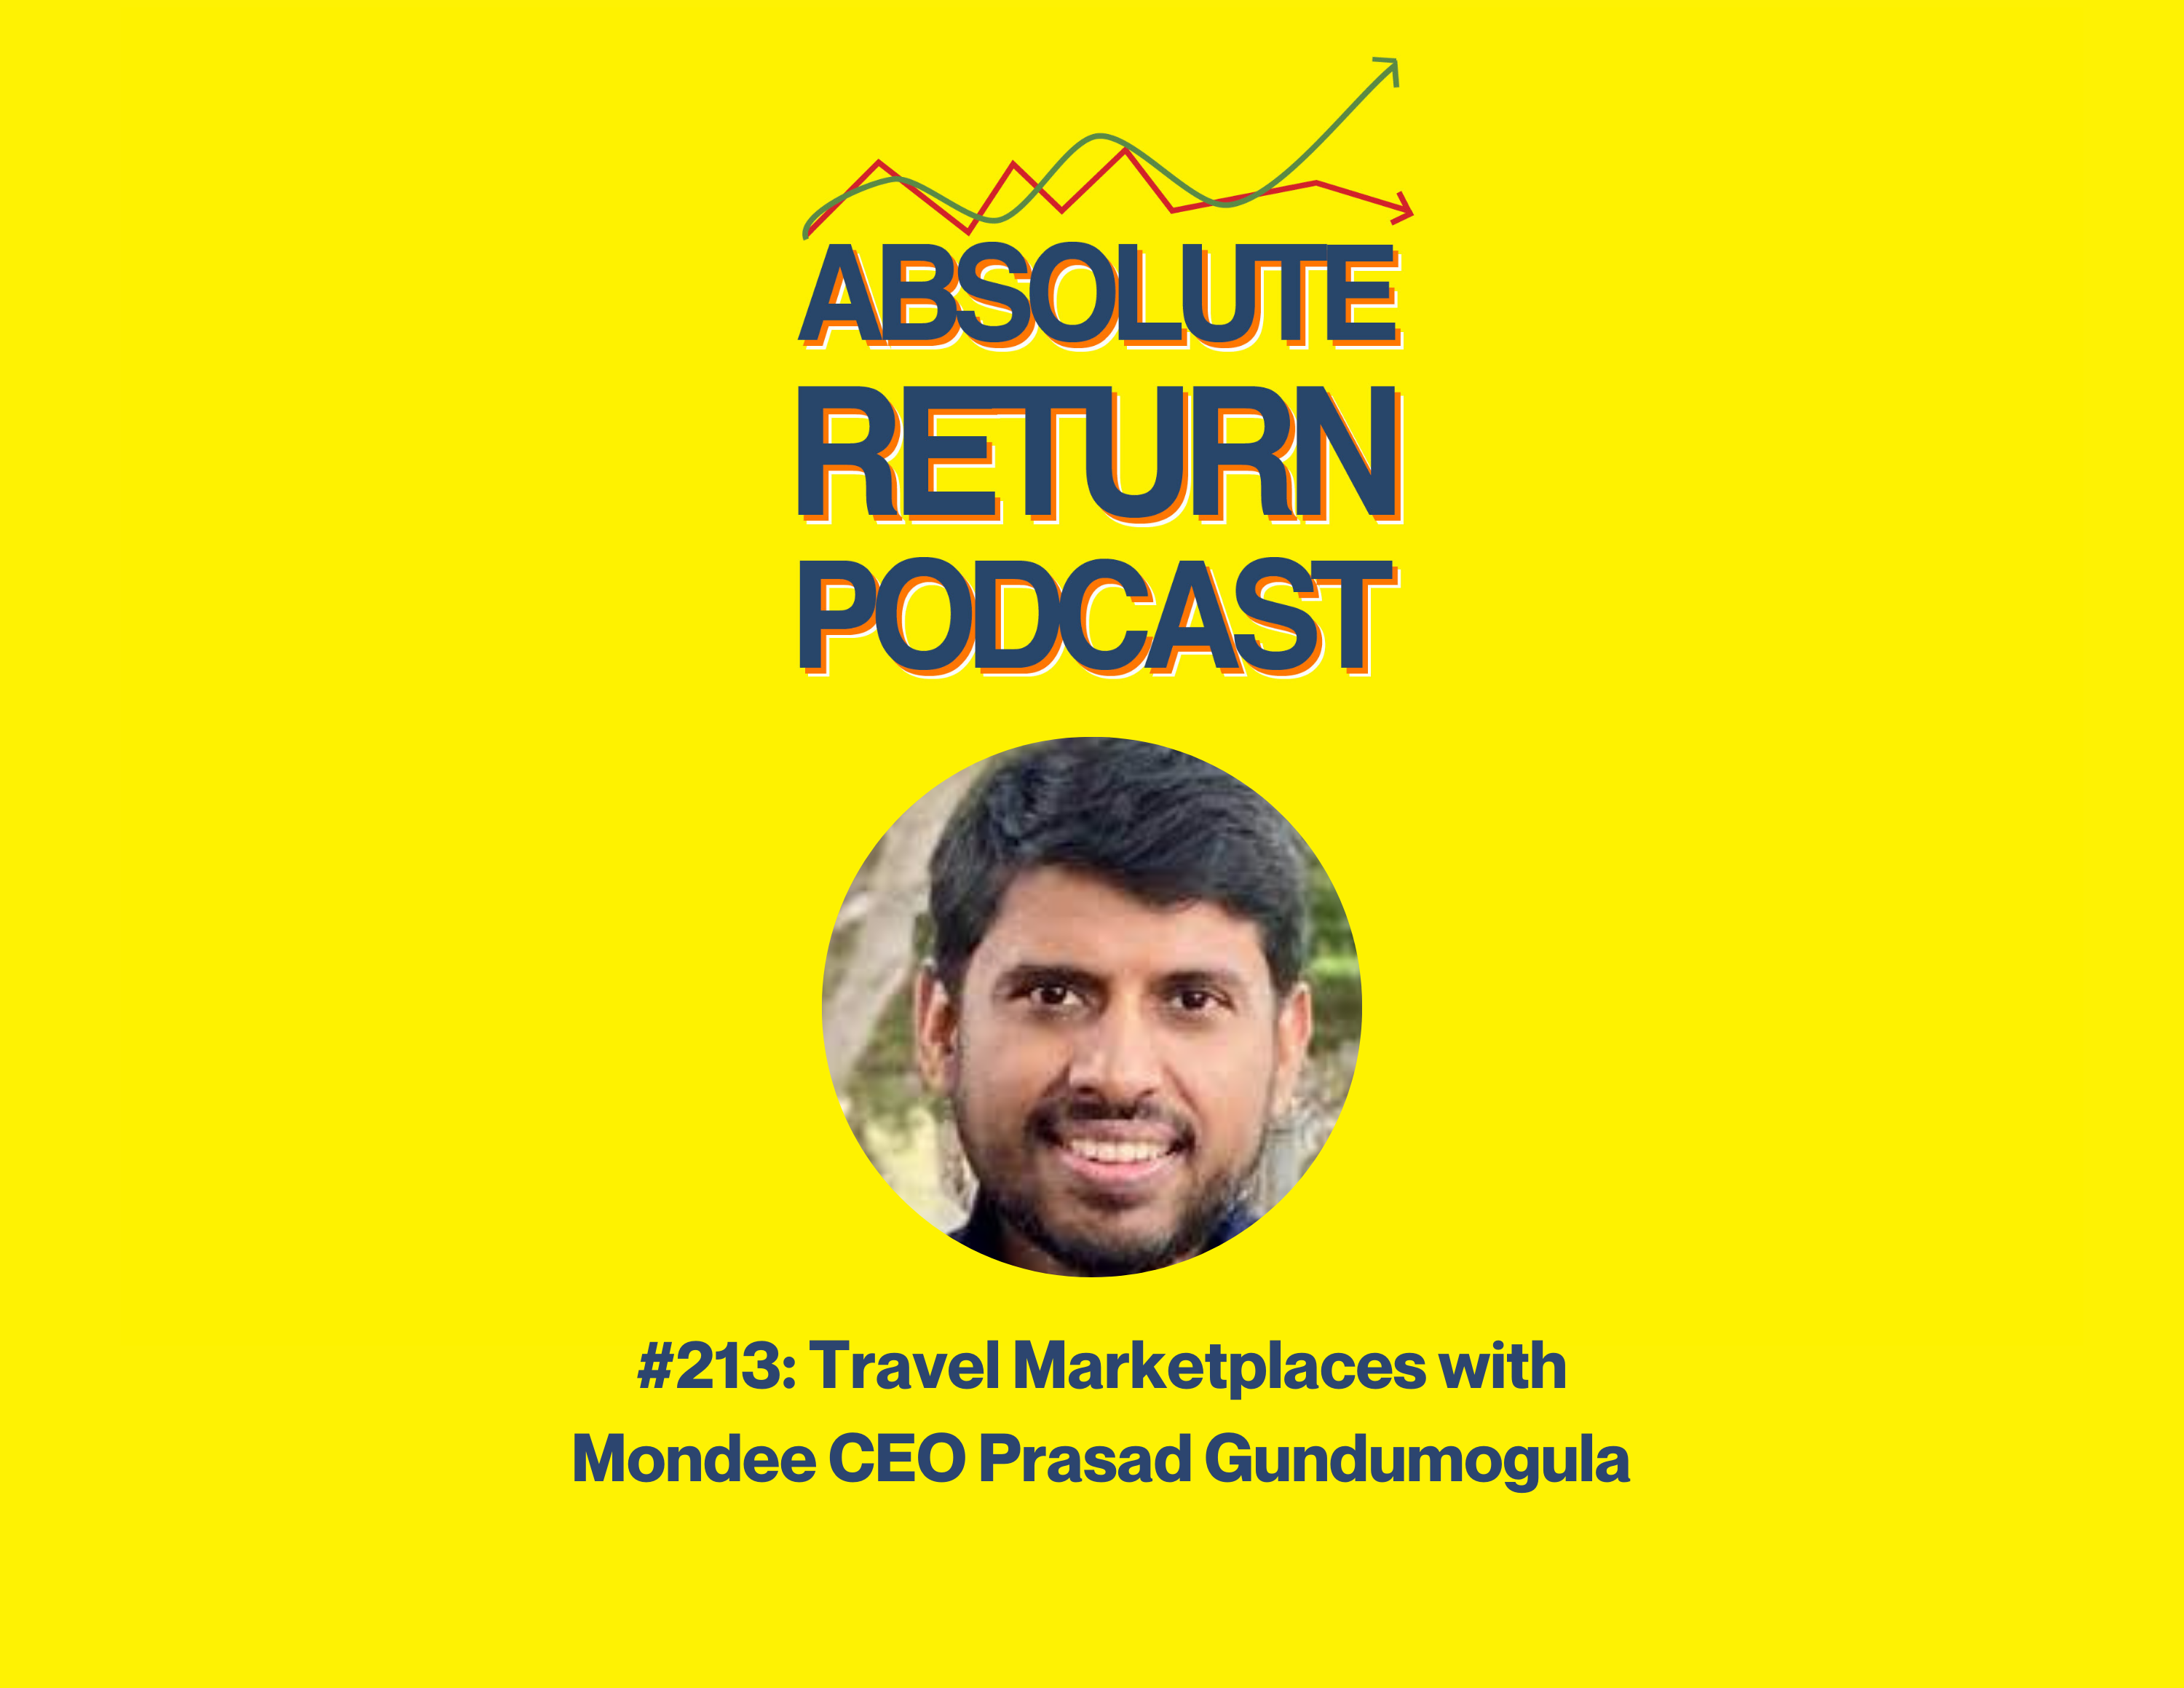 Absolute Return Podcast #213: Travel Marketplaces with Mondee CEO Prasad Gundumogula